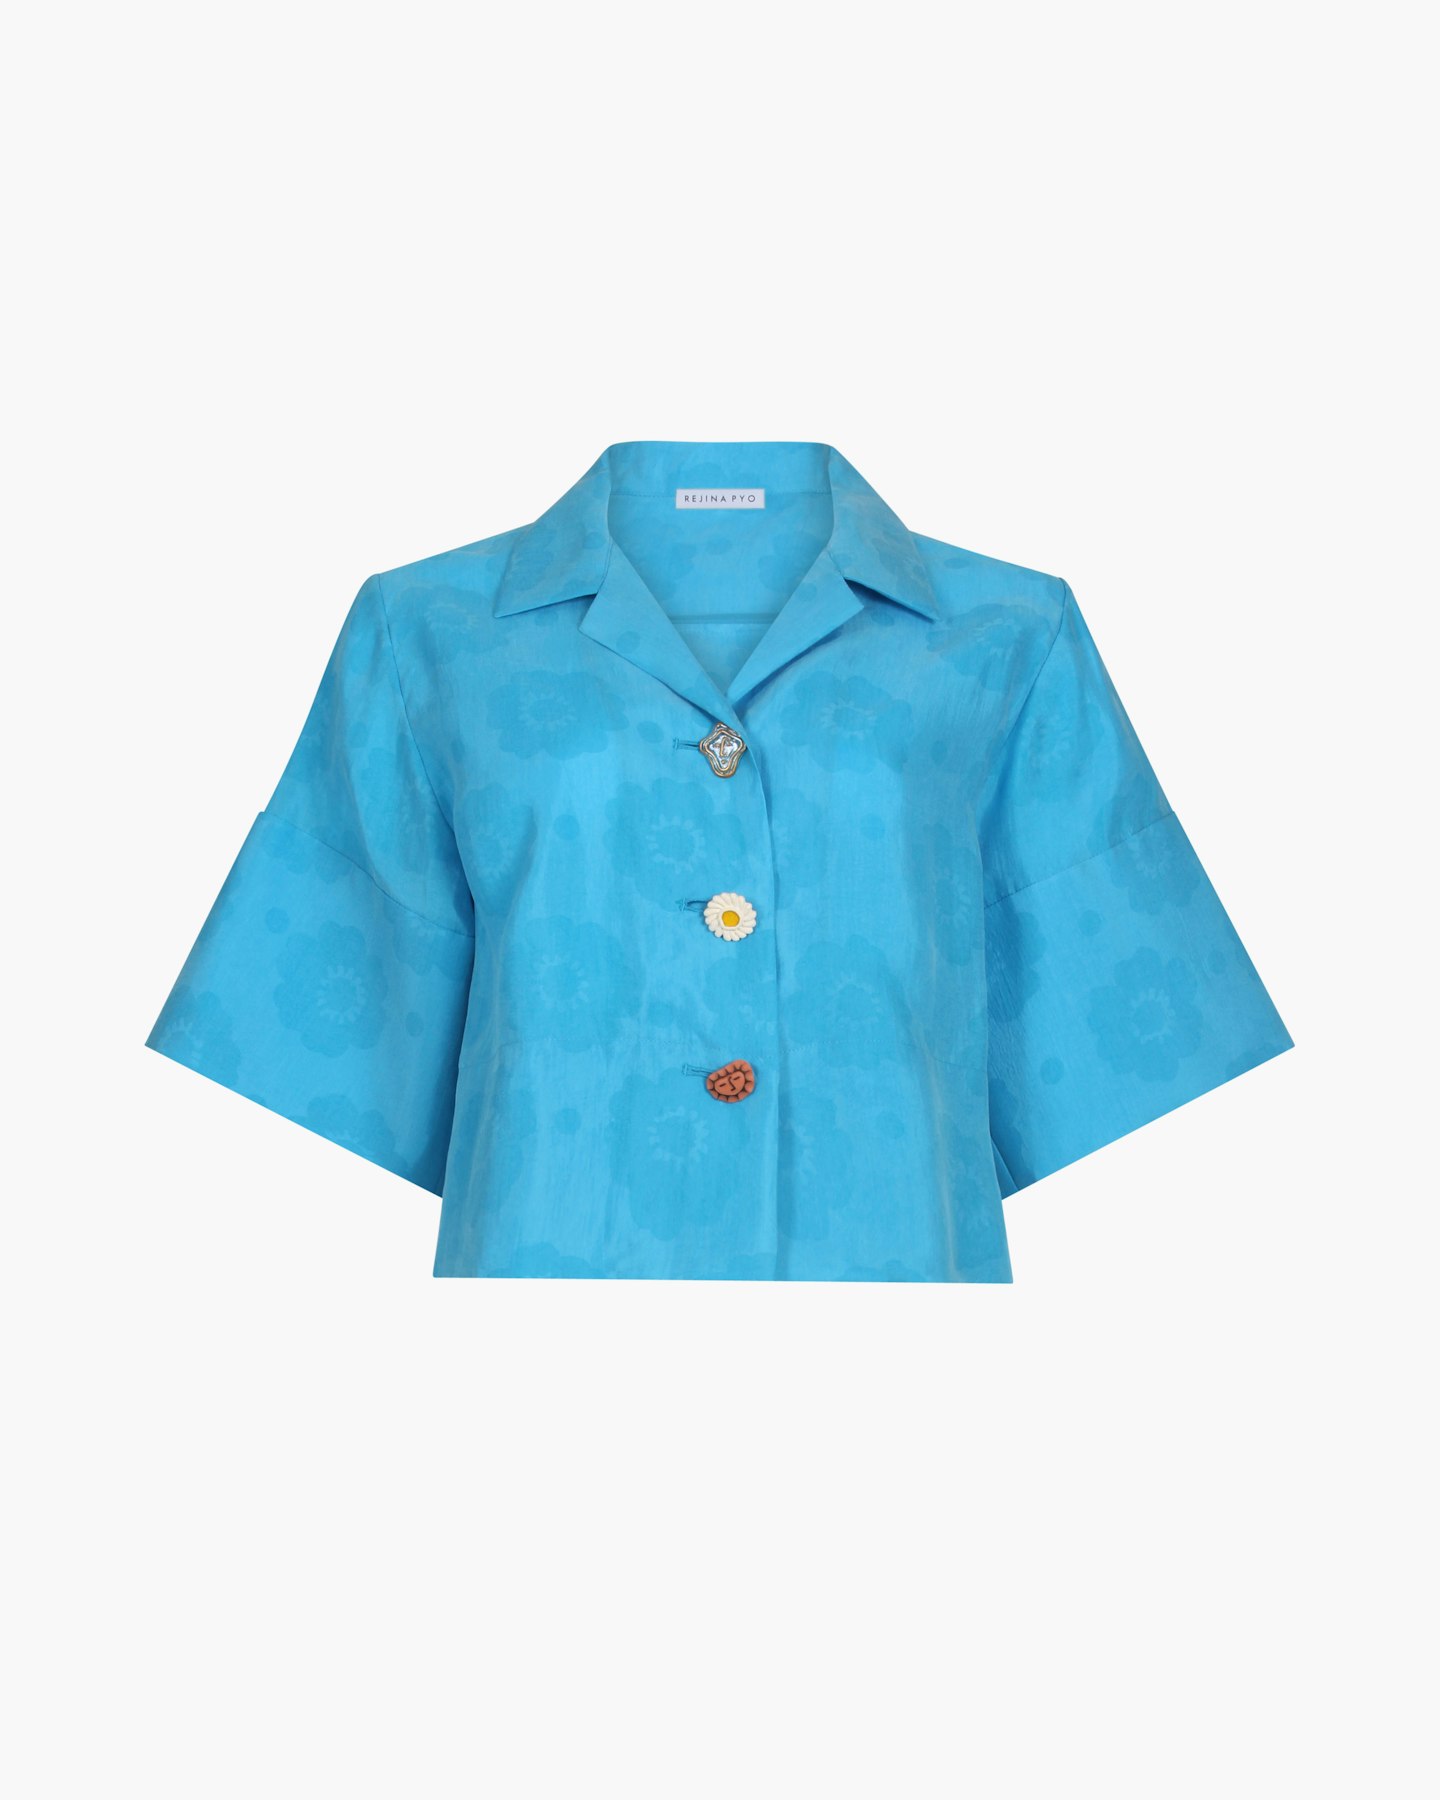 Rejina Pyo, Meryl Shirt Lyocell Flower Blue, £325